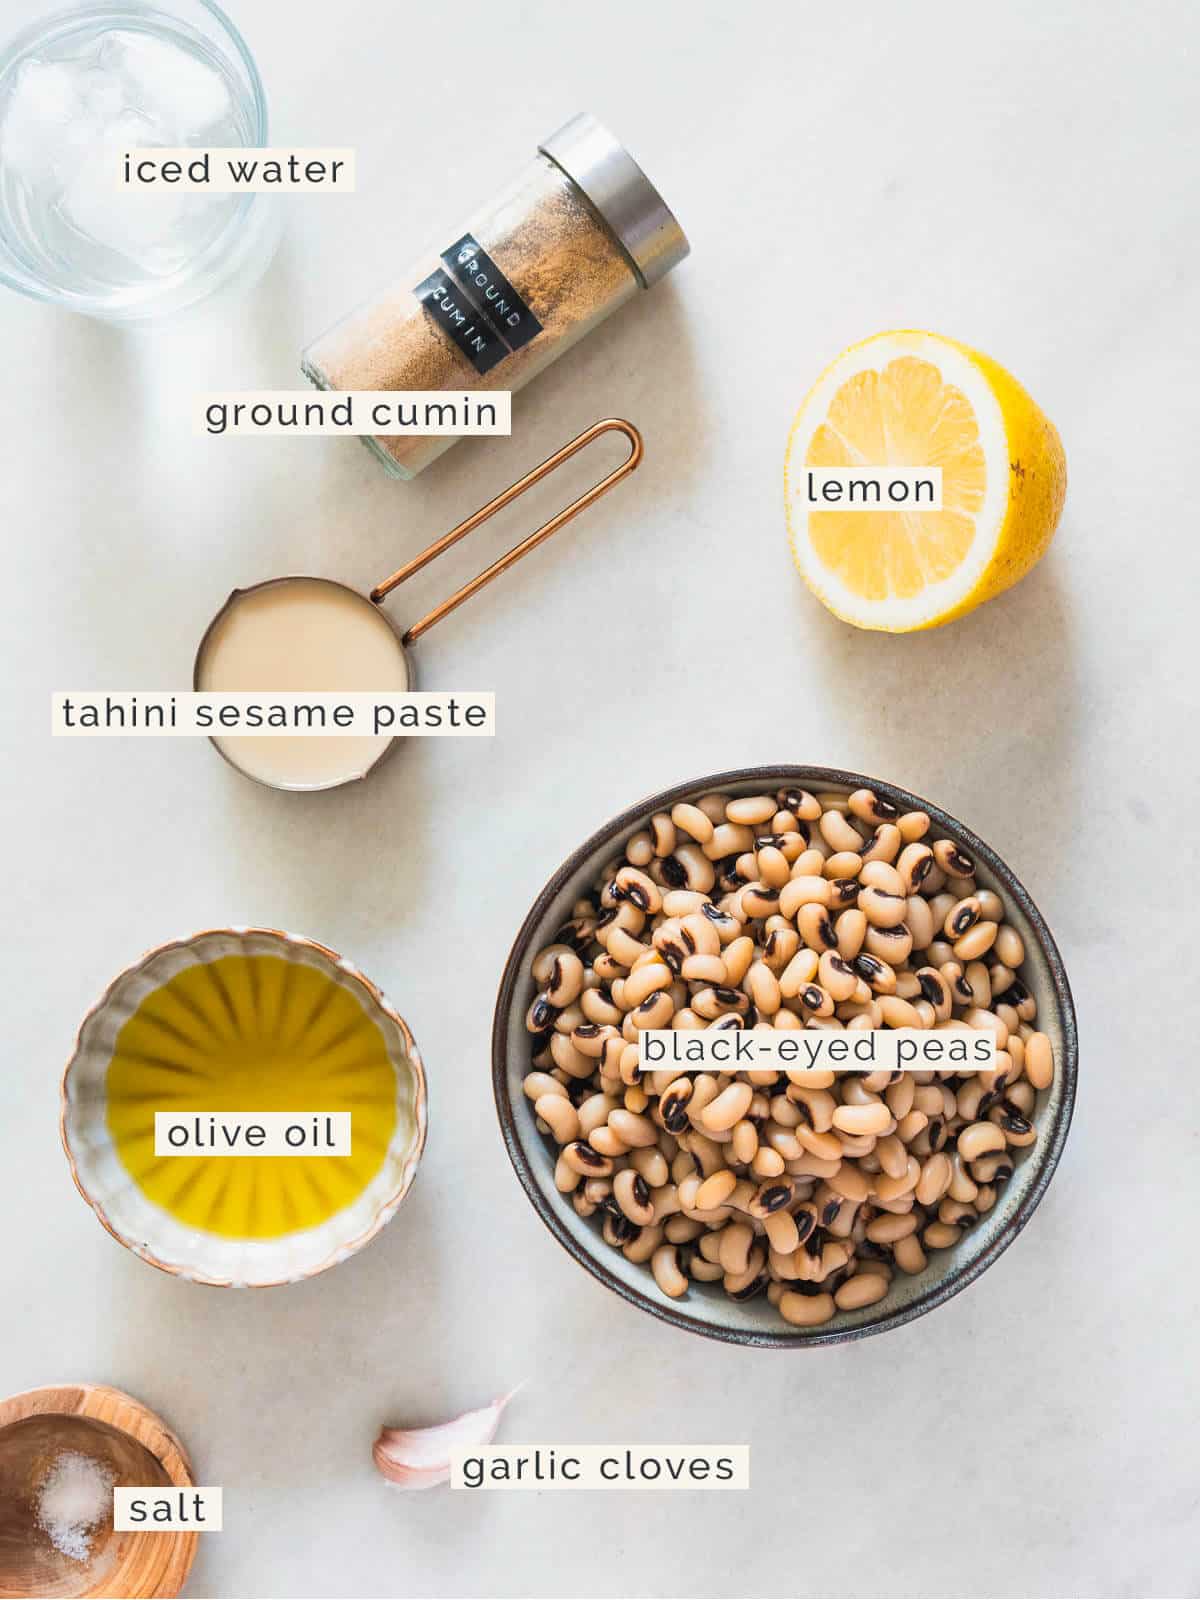 ingredients to make a black eyes peas hummus on a table.